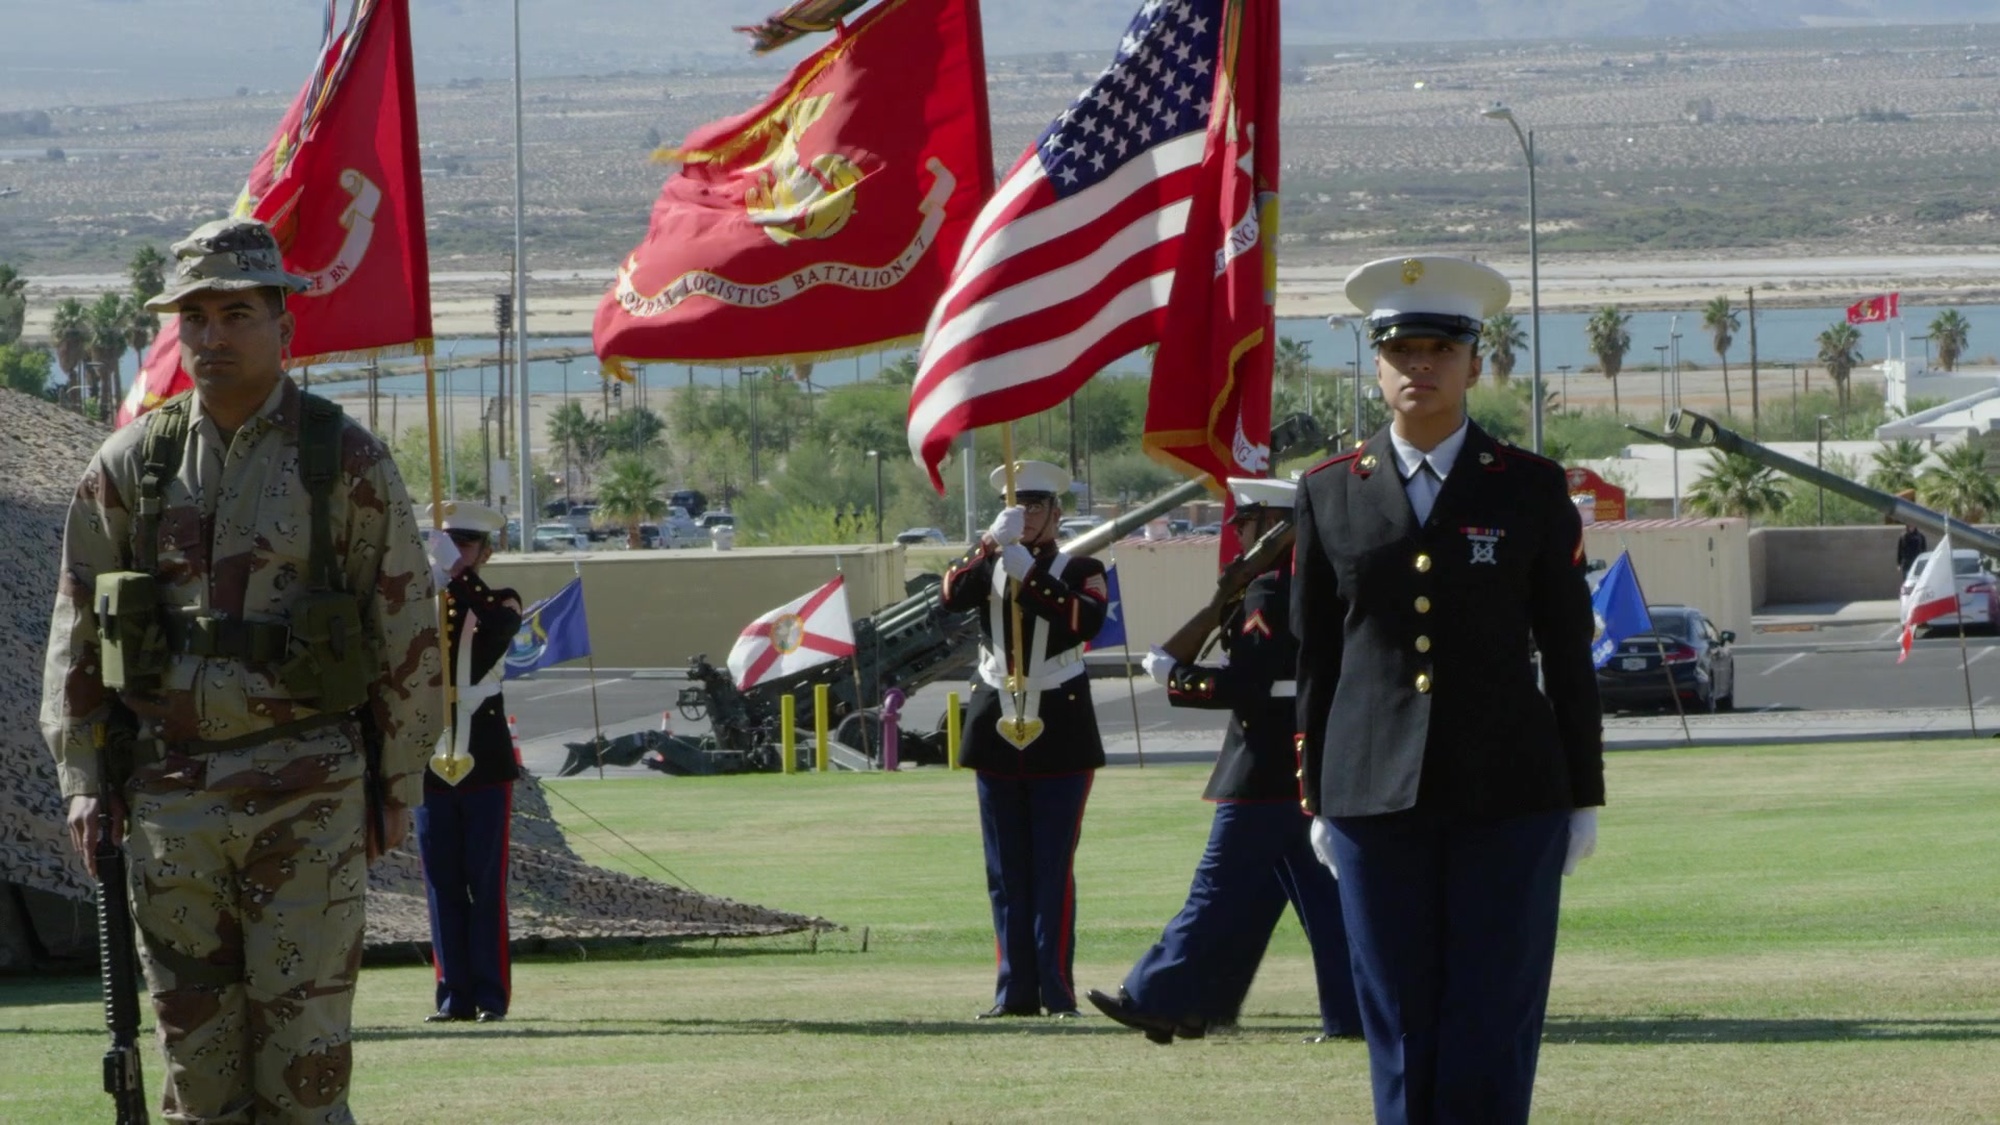 Oorah!: United States Marine Corps celebrates 247th birthday